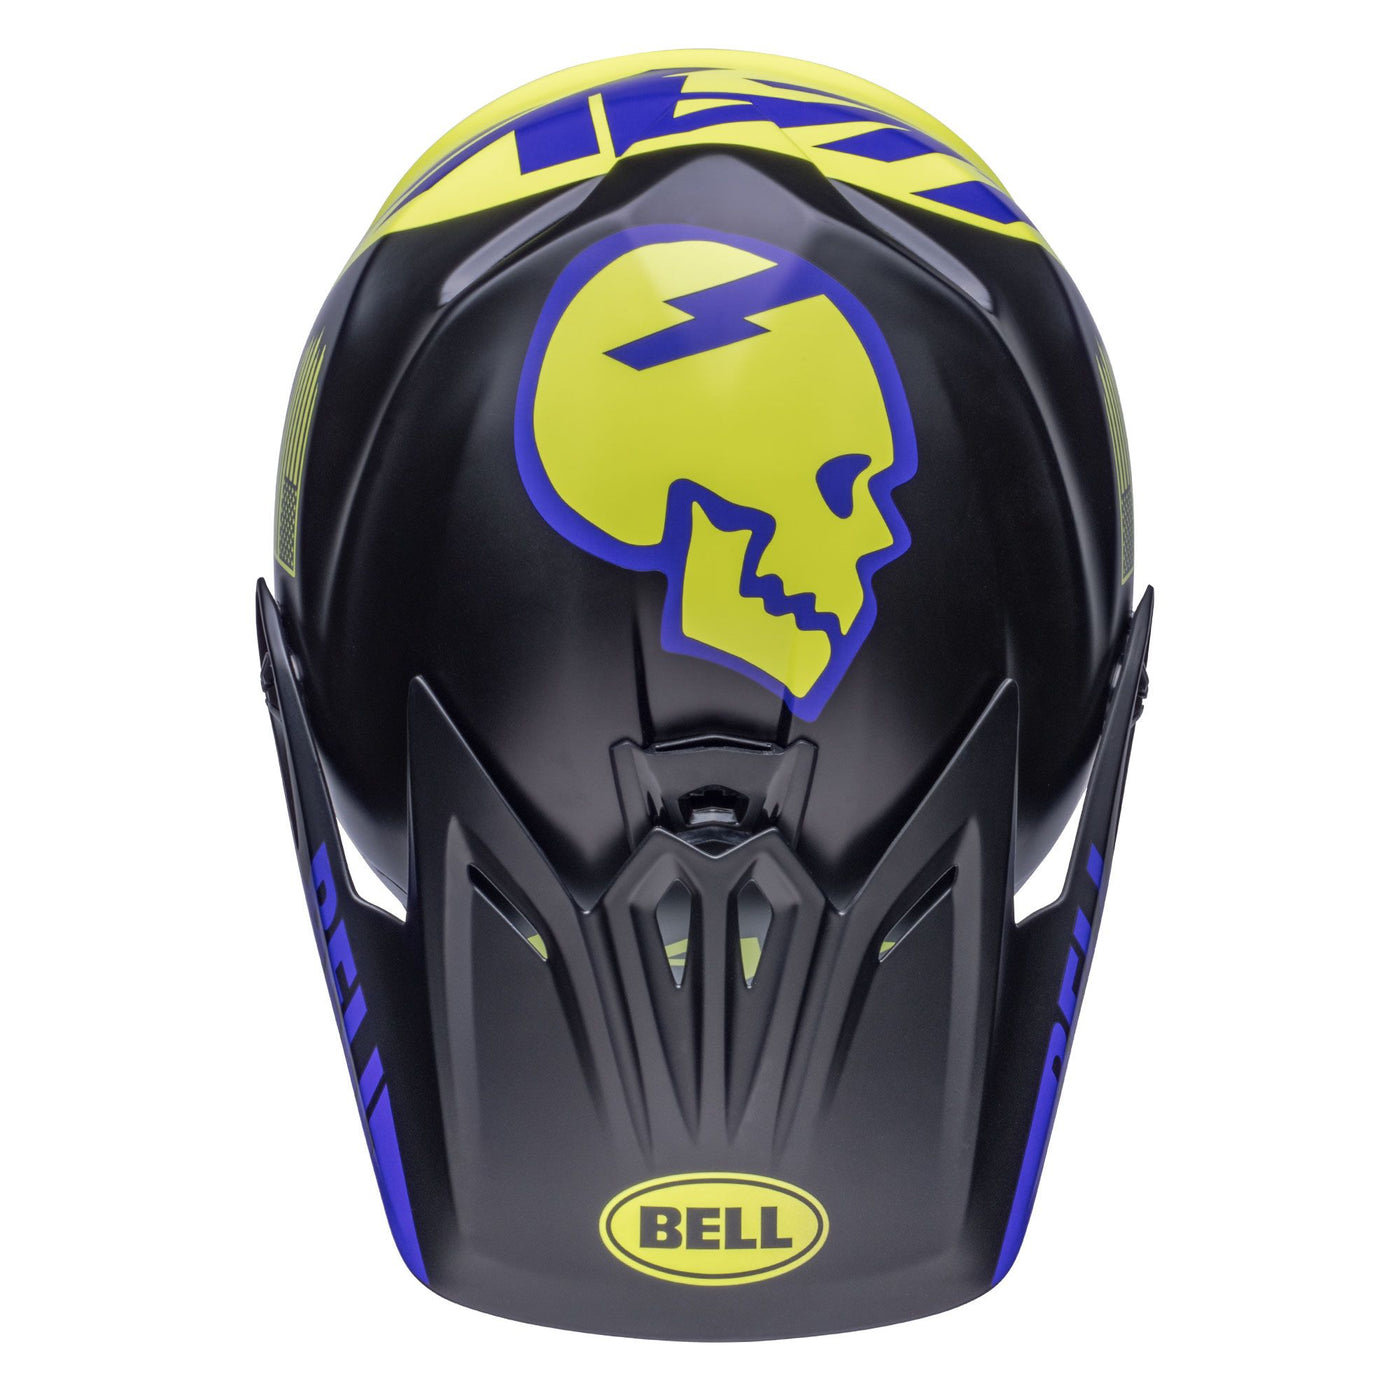 bell moto 9 youth mips motorcycle helmet slayco matte black hi viz yellow top